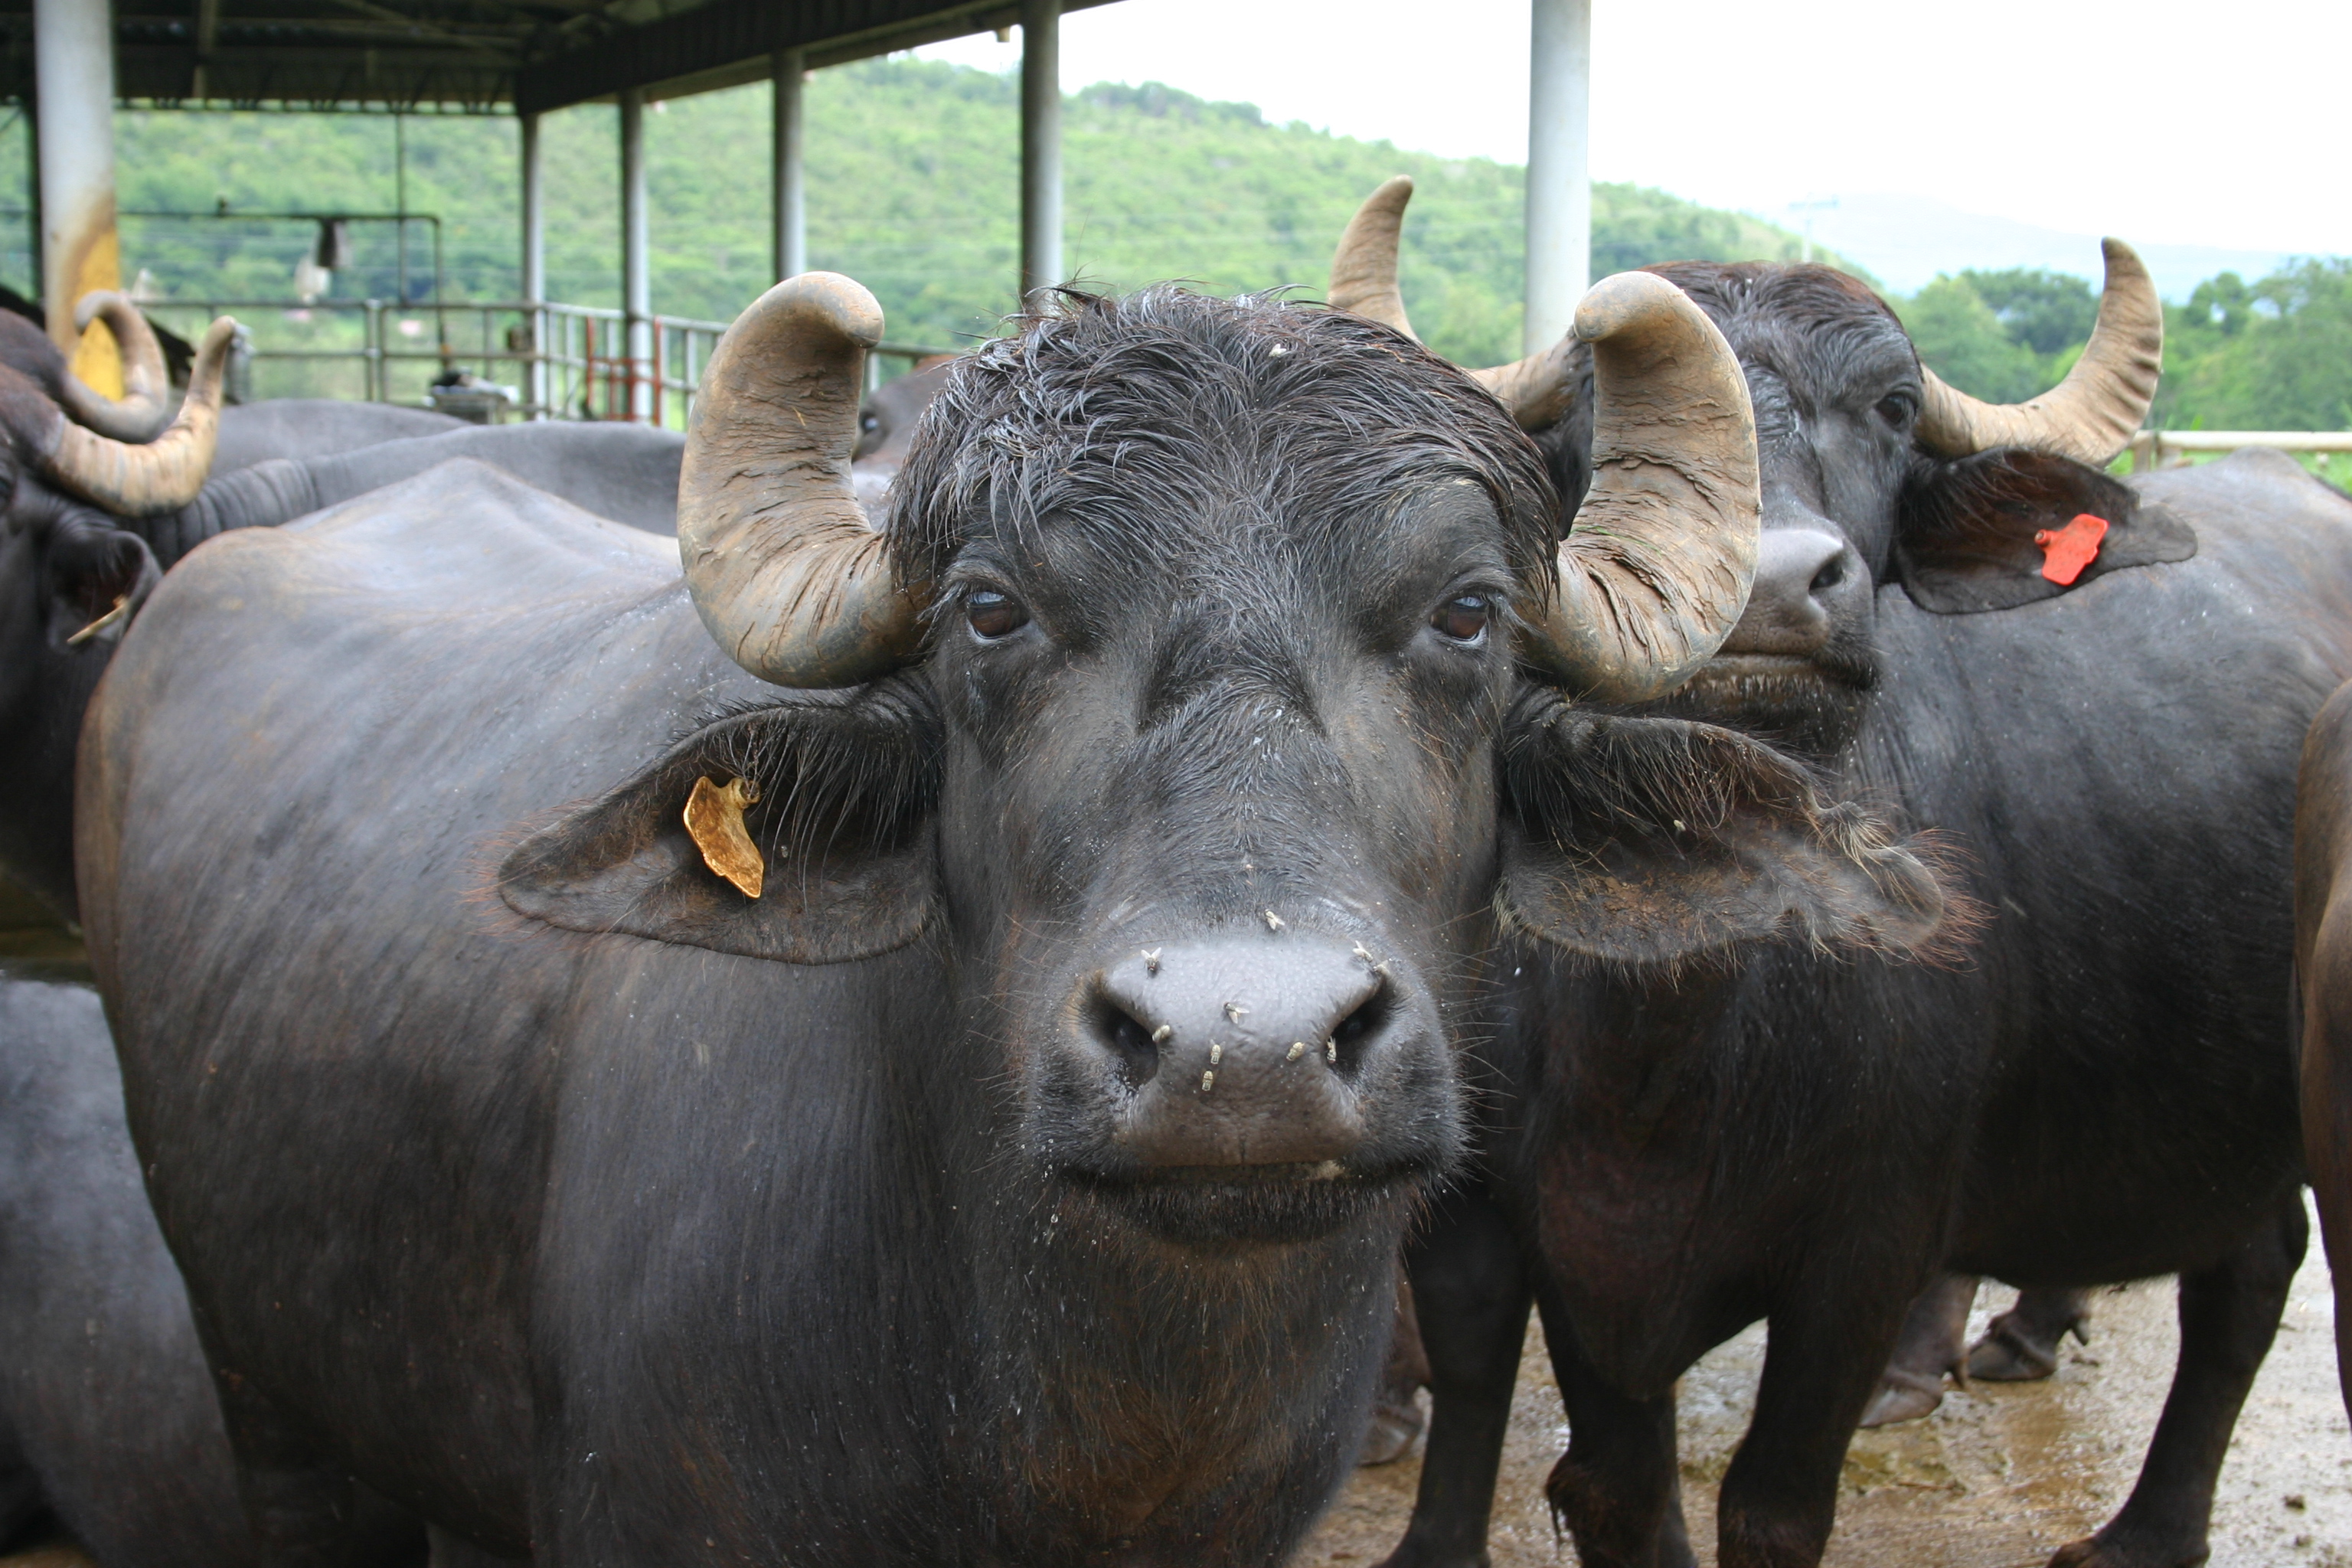 Murrah buffalo - Wikipedia